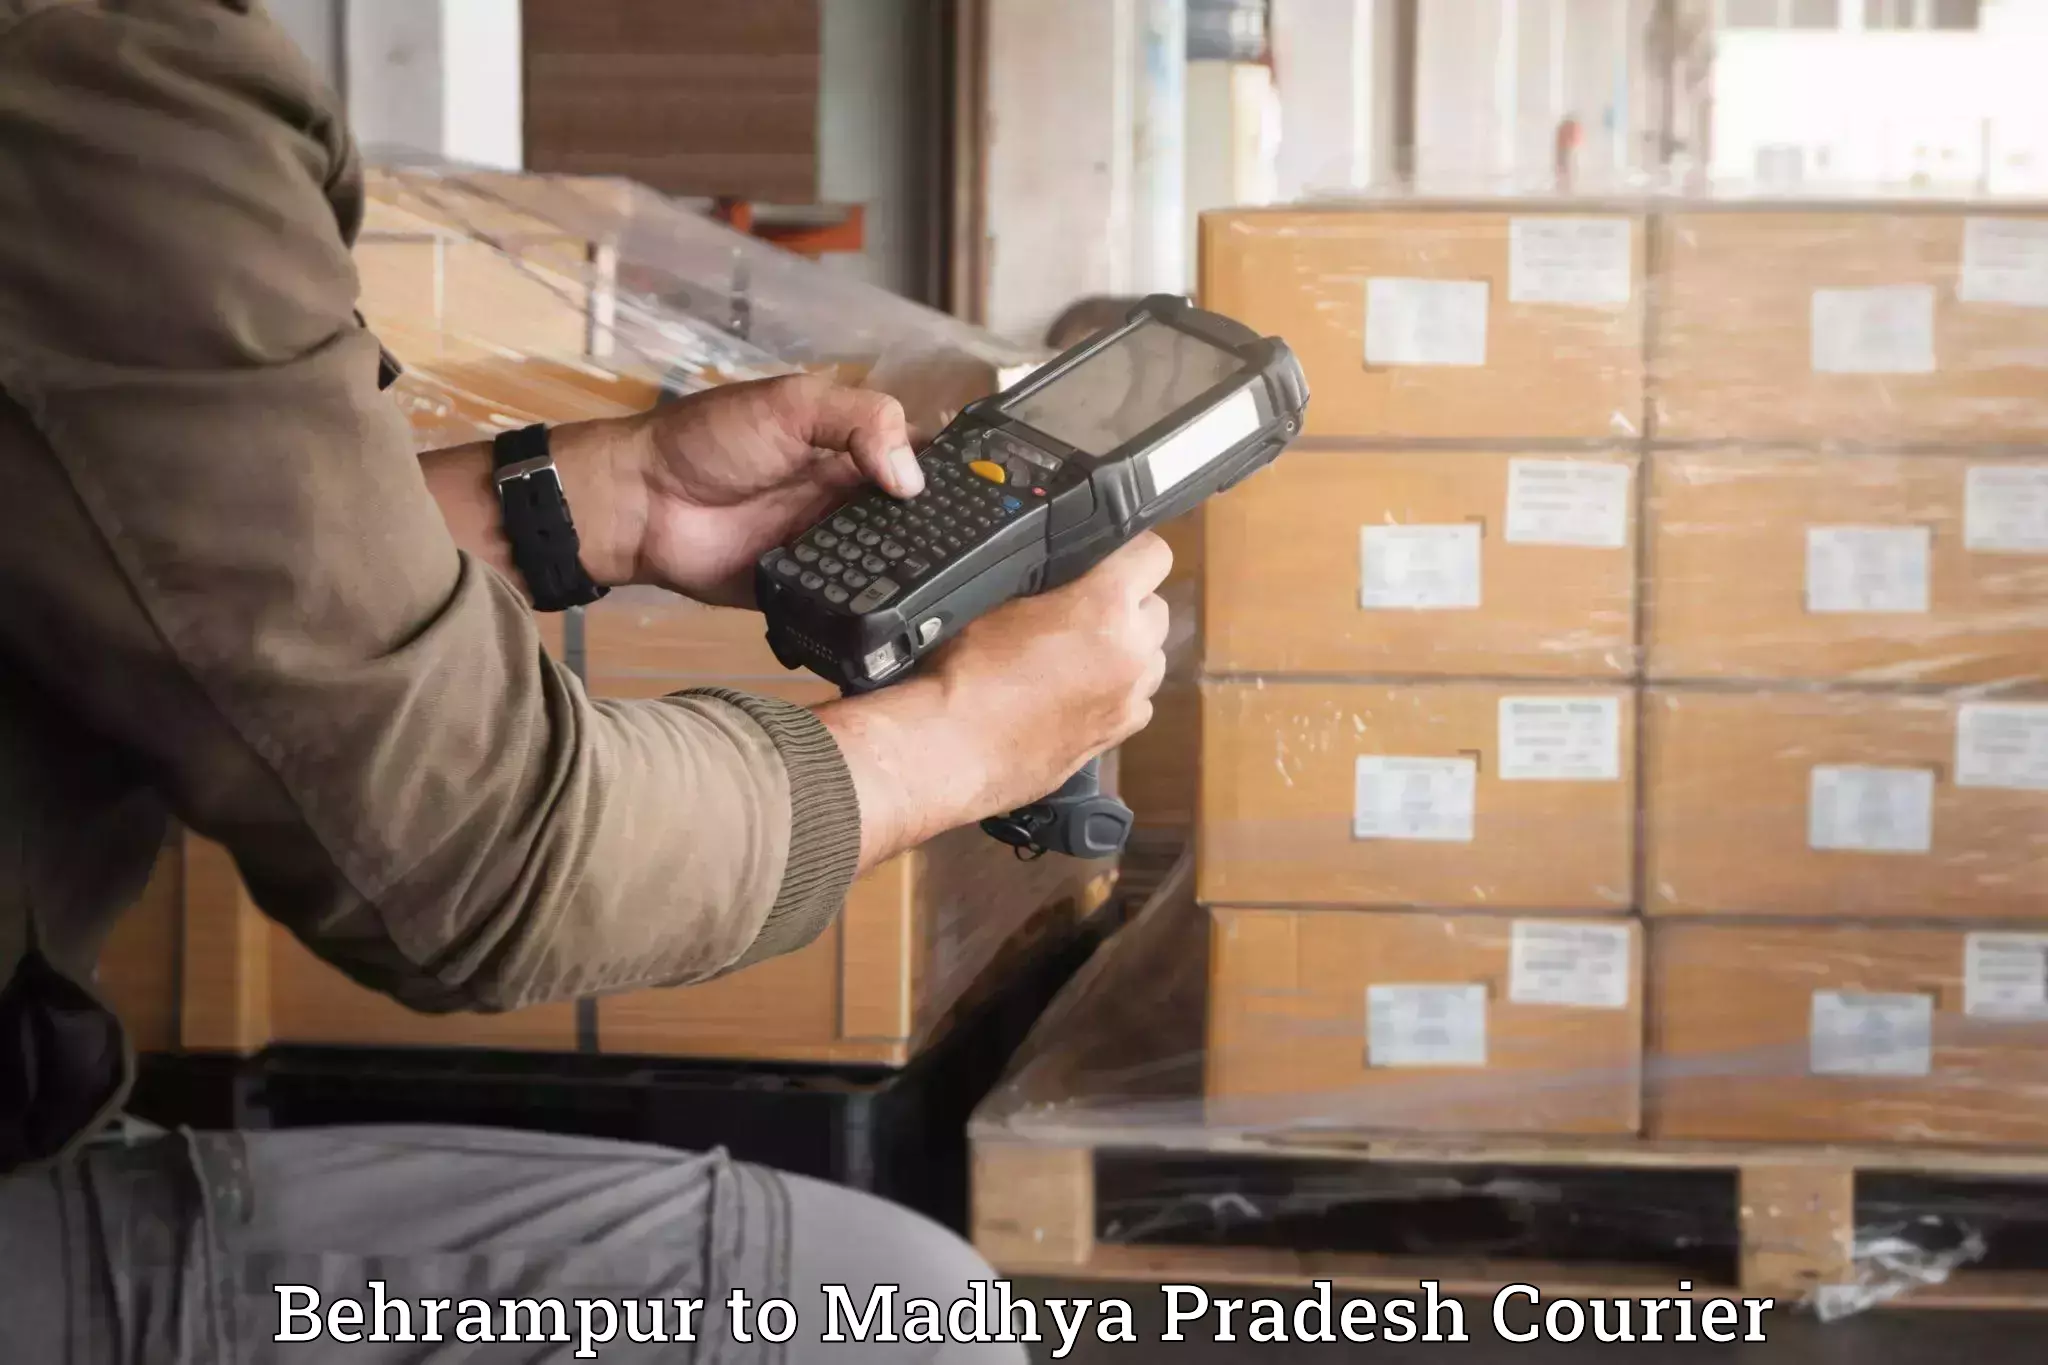 Furniture delivery service Behrampur to Madhya Pradesh